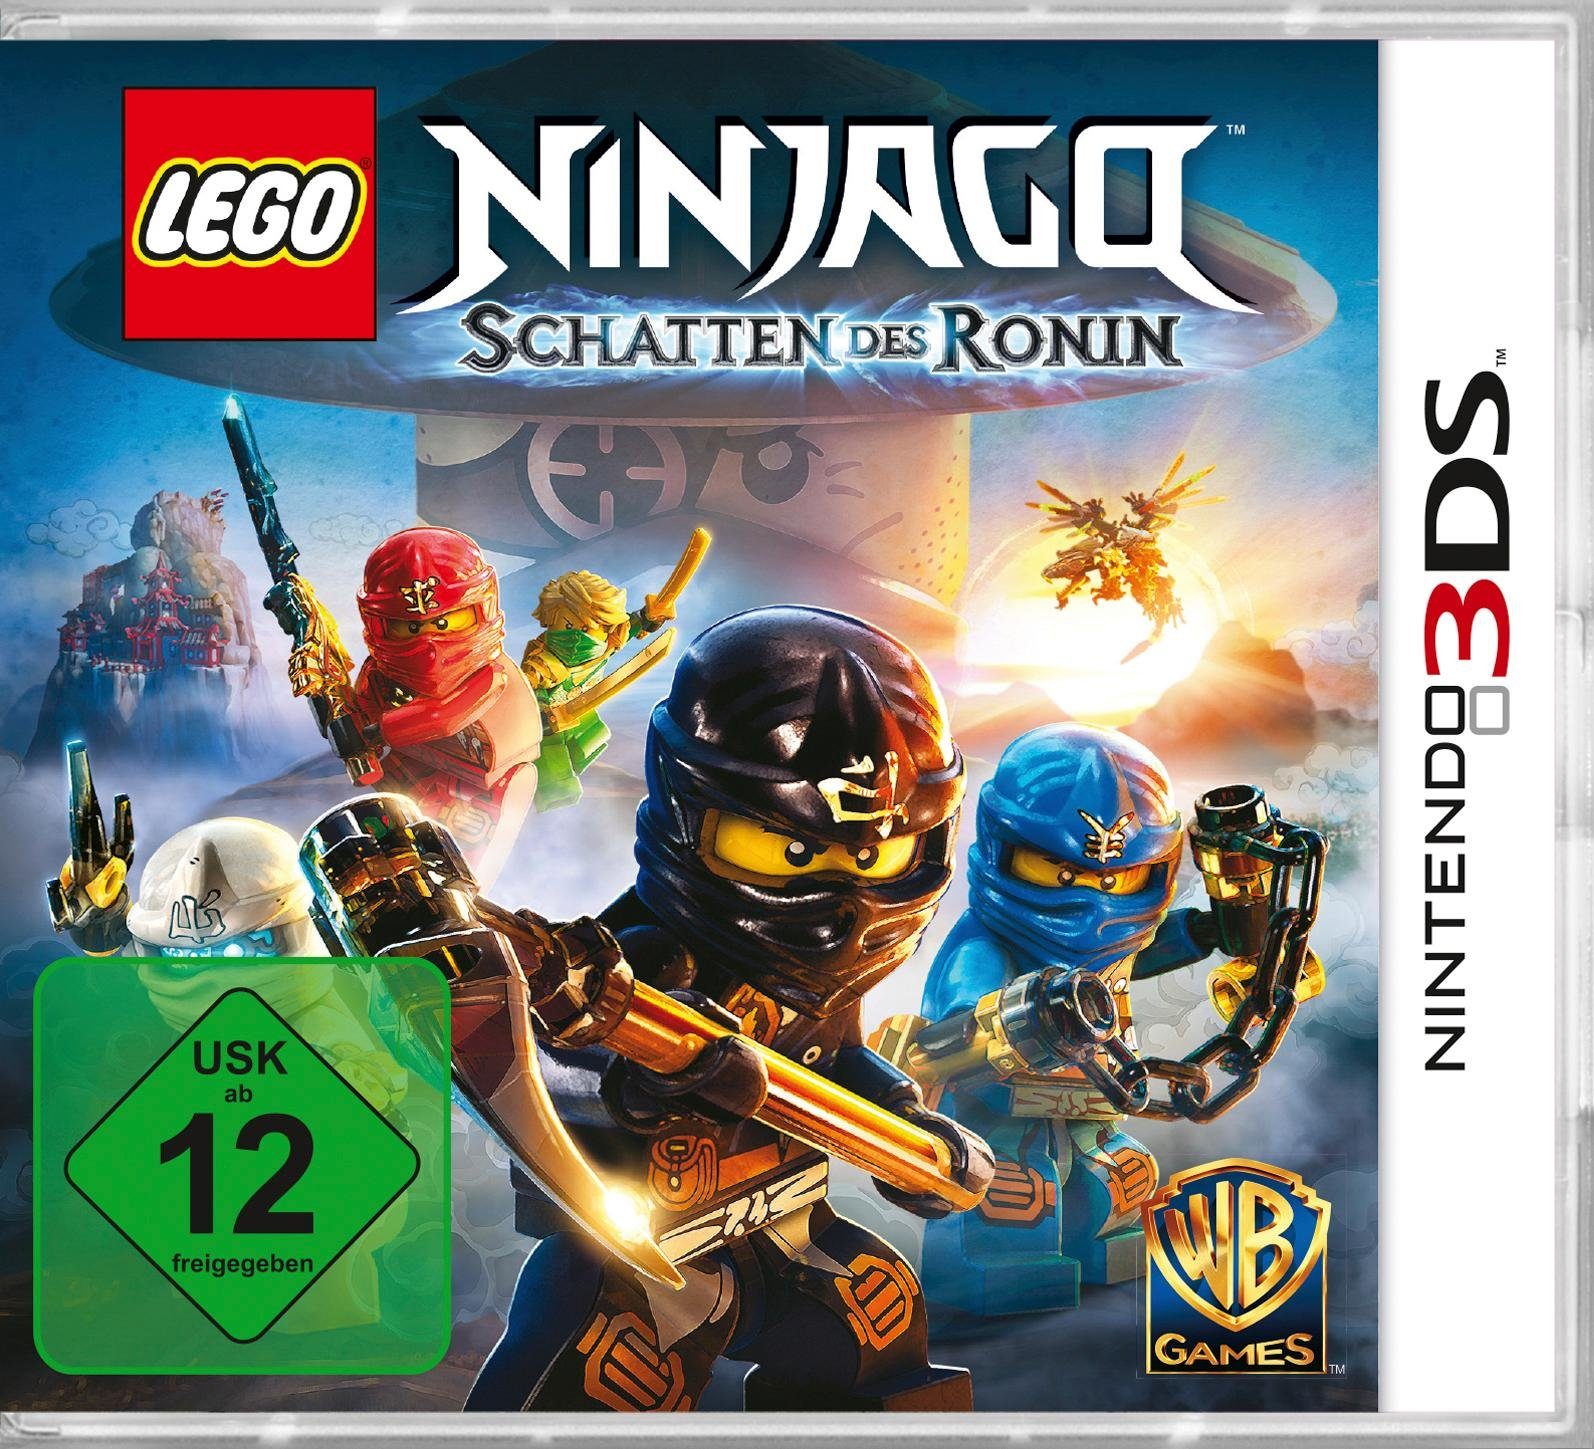 Pyramide Ninjago: 3DS, Software des Lego Schatten Nintendo Ronin